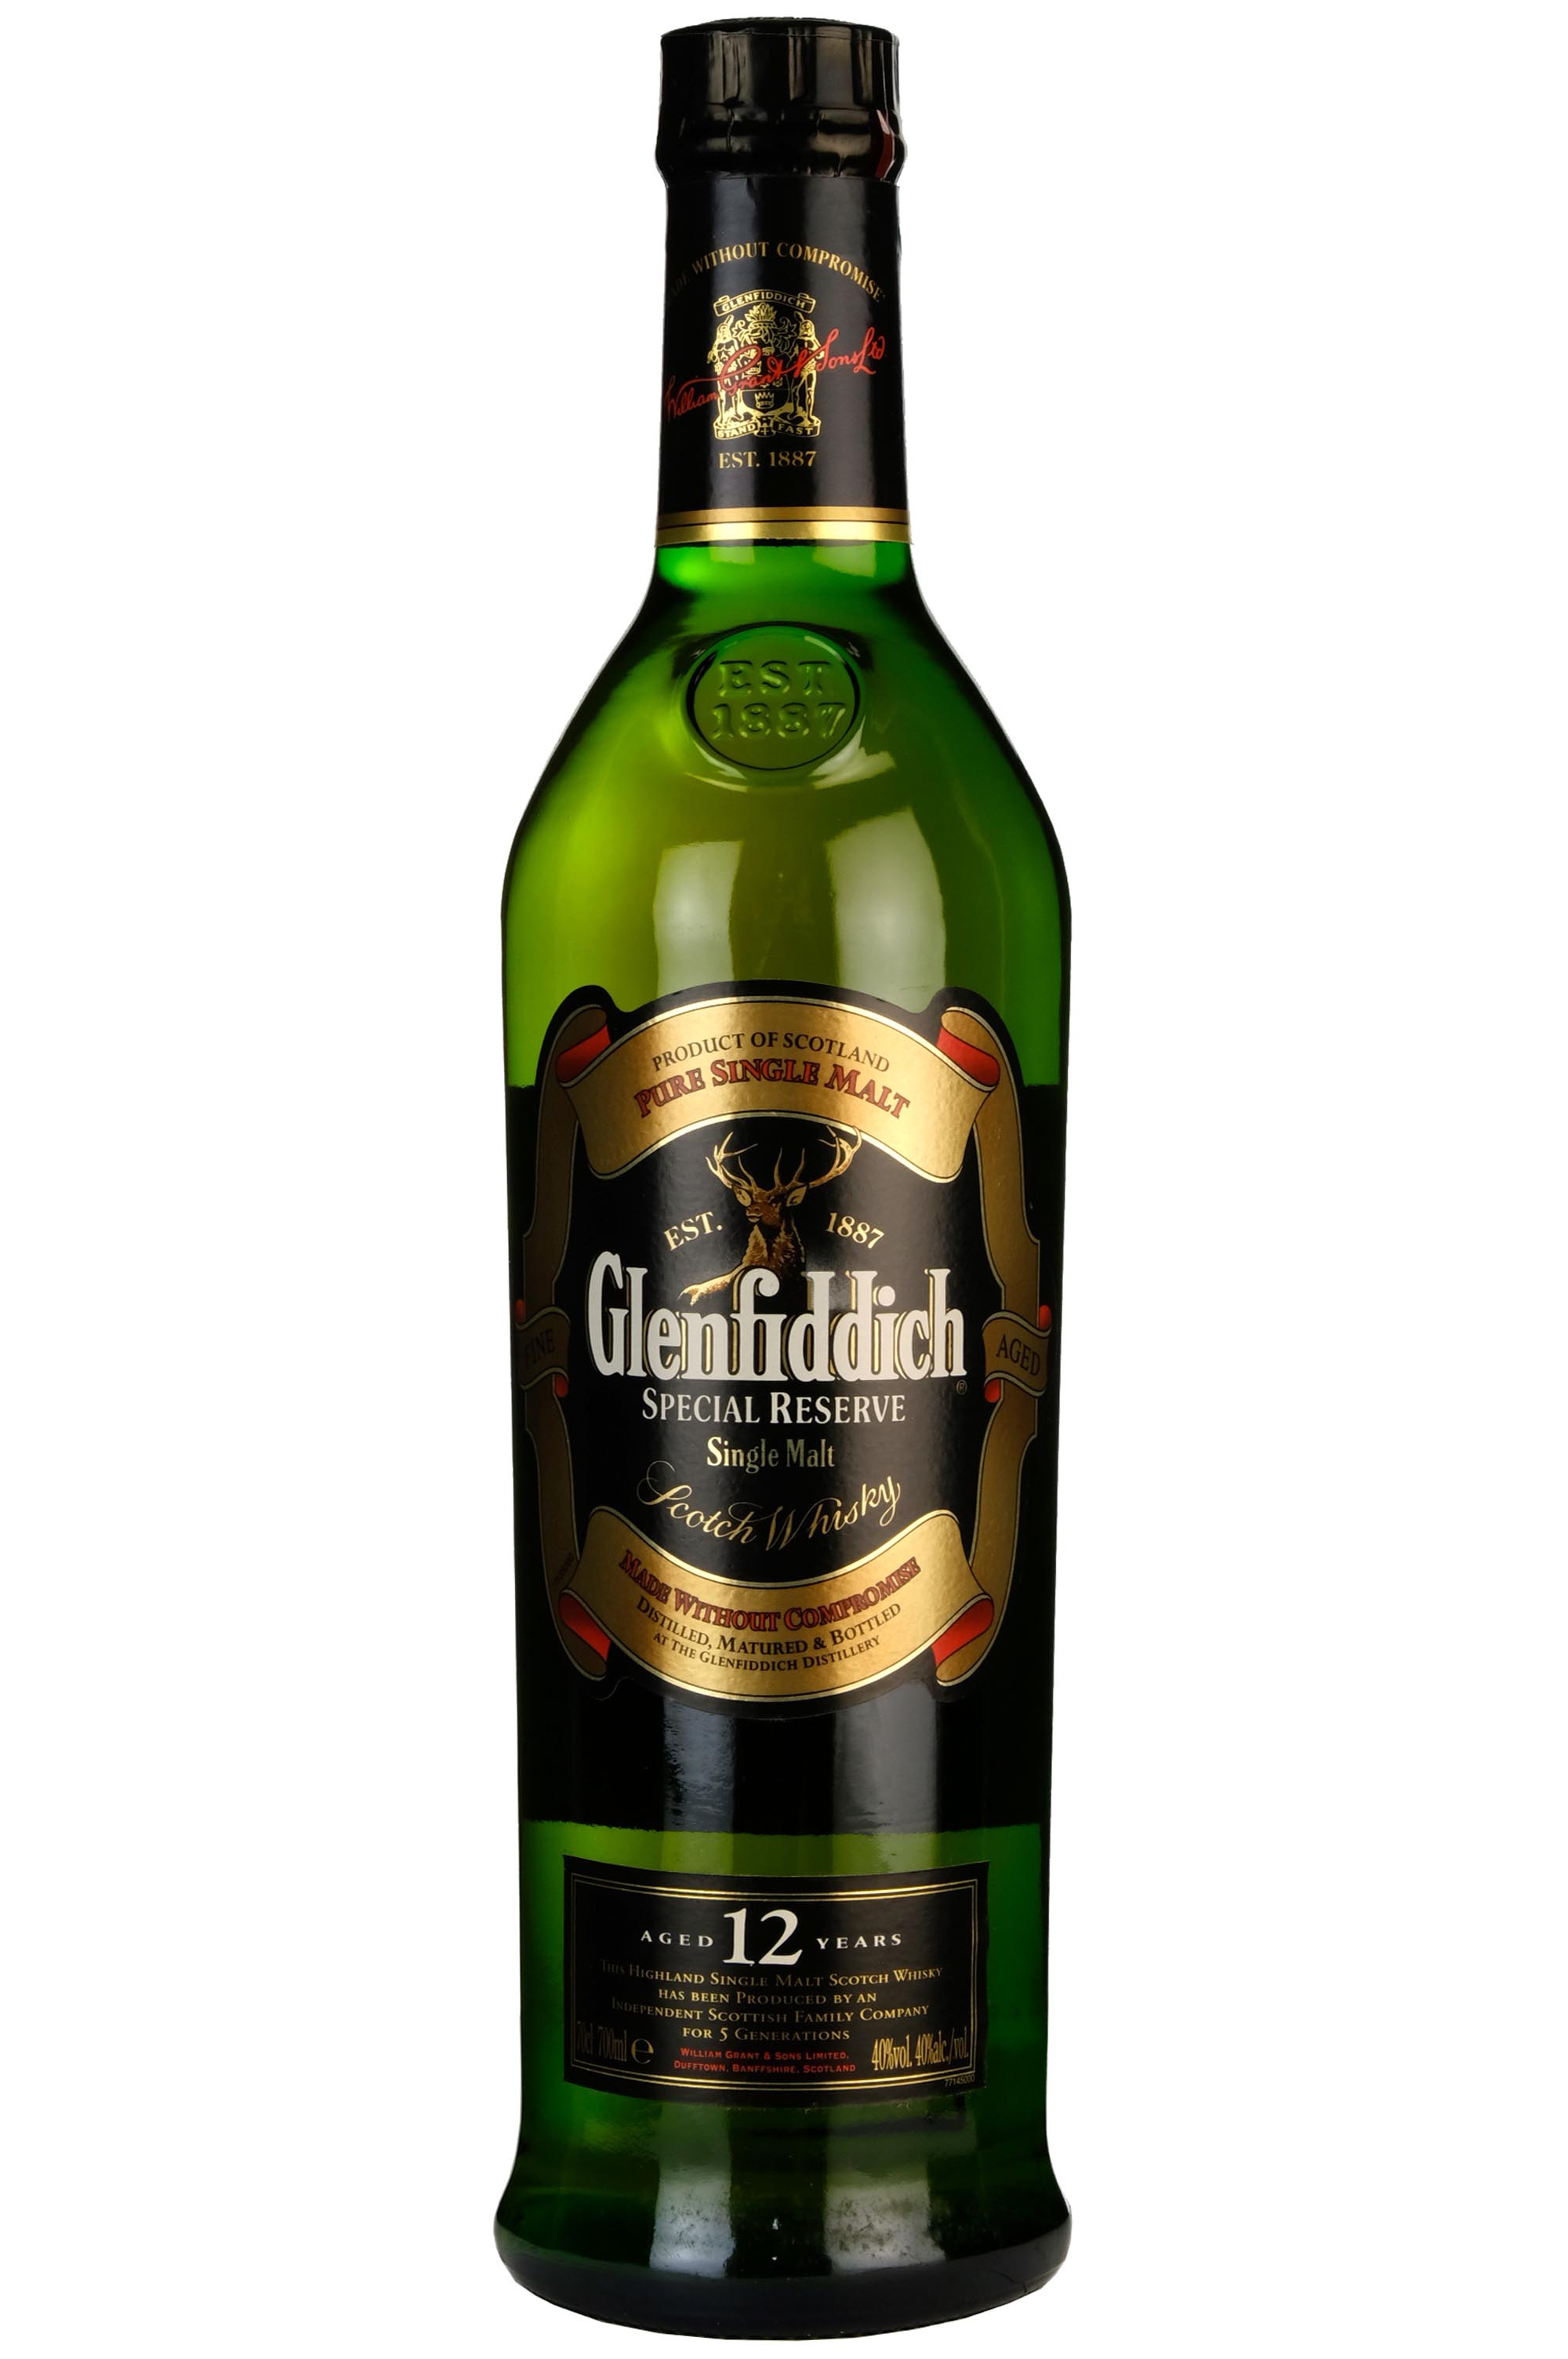 Glenfiddich 12 Year Old Single Malt Scotch Whisky, Speyside